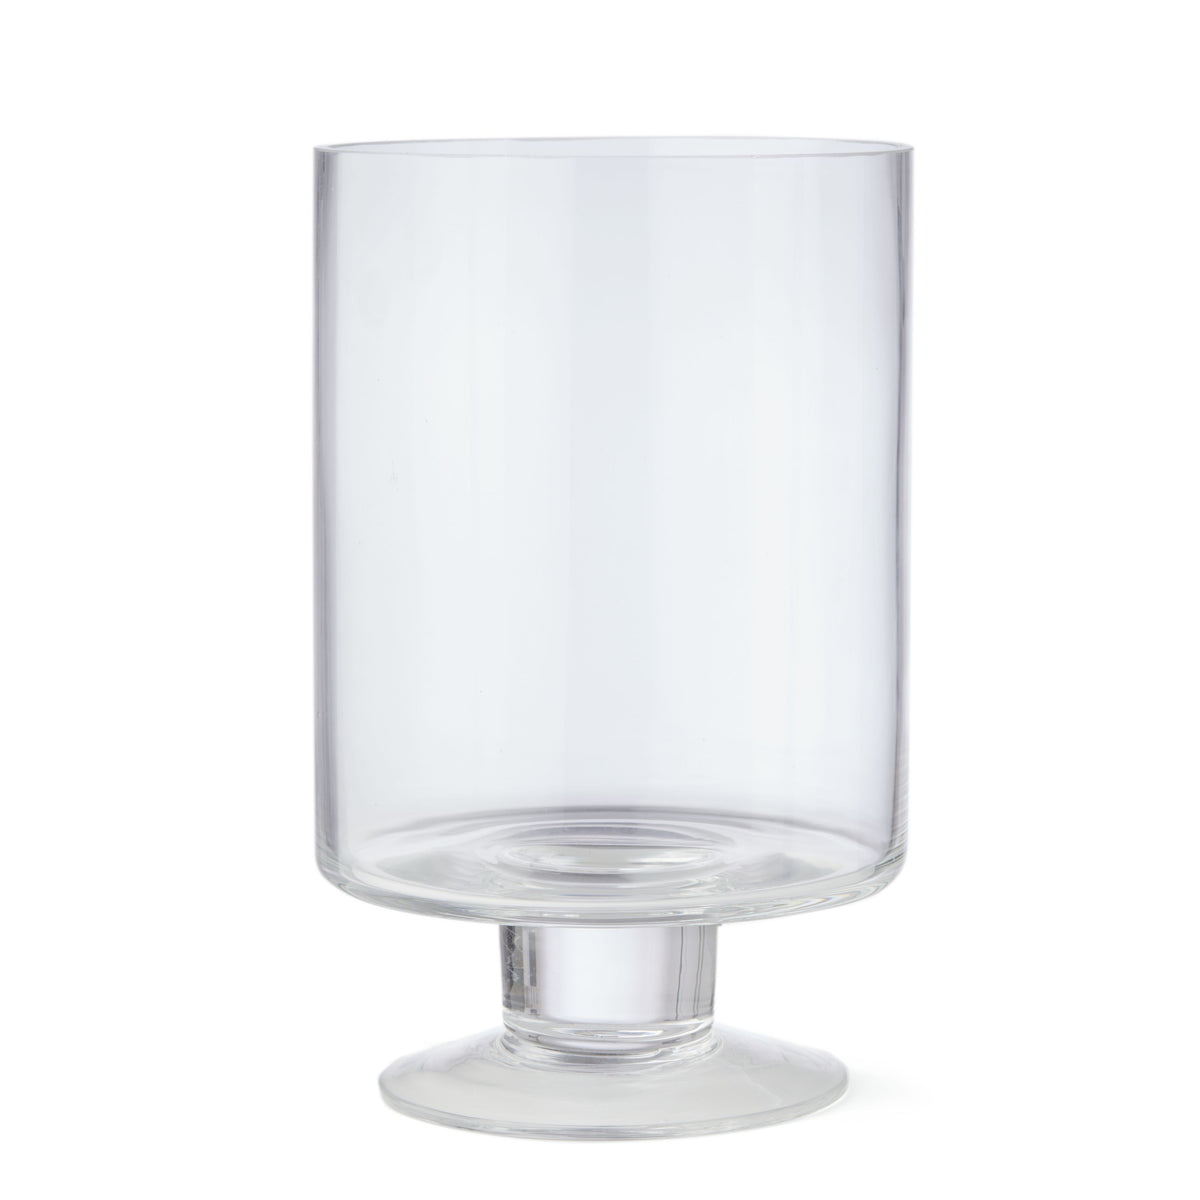 Glass Hurricane Lantern